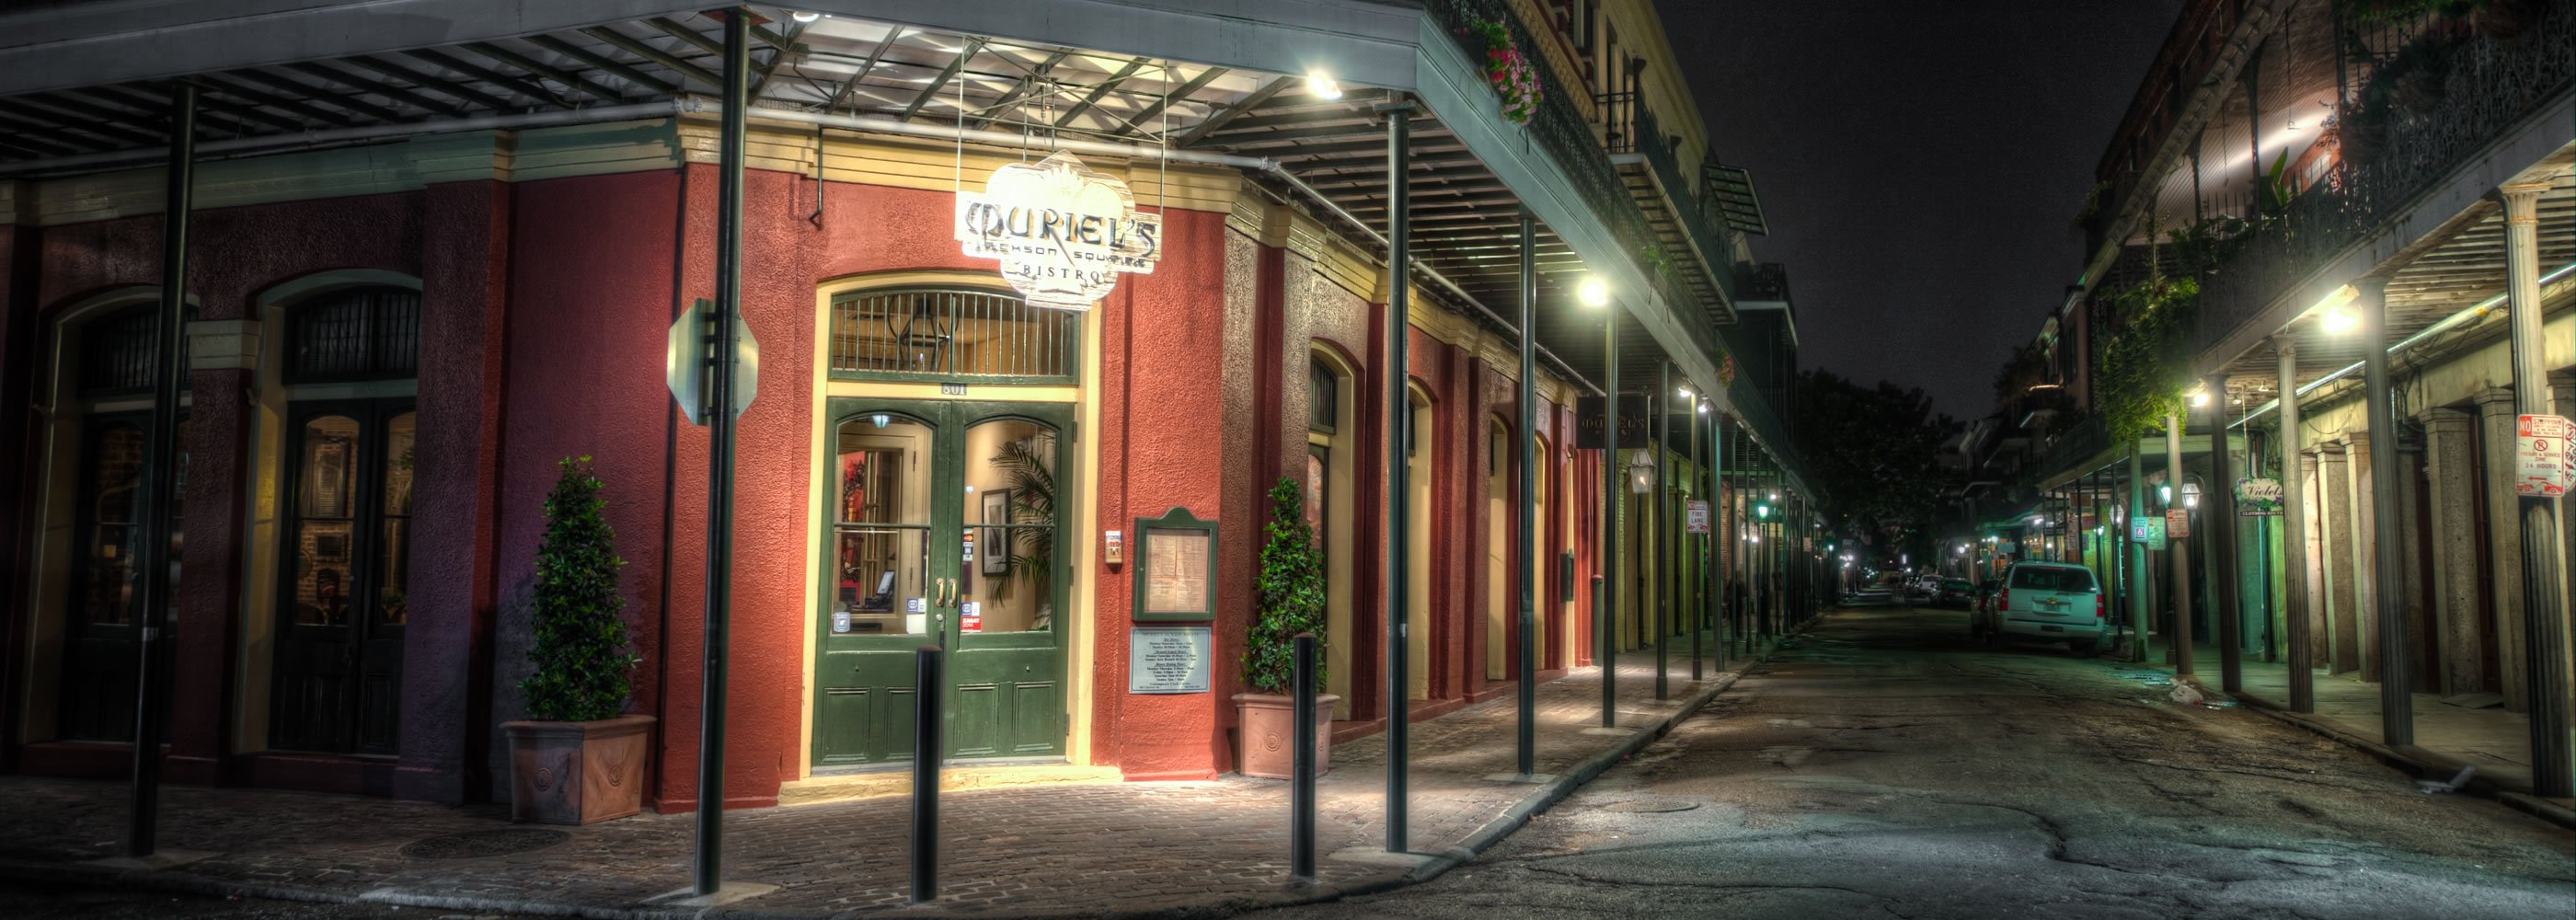 Haunted Muriel's Restaurant in New Orleans